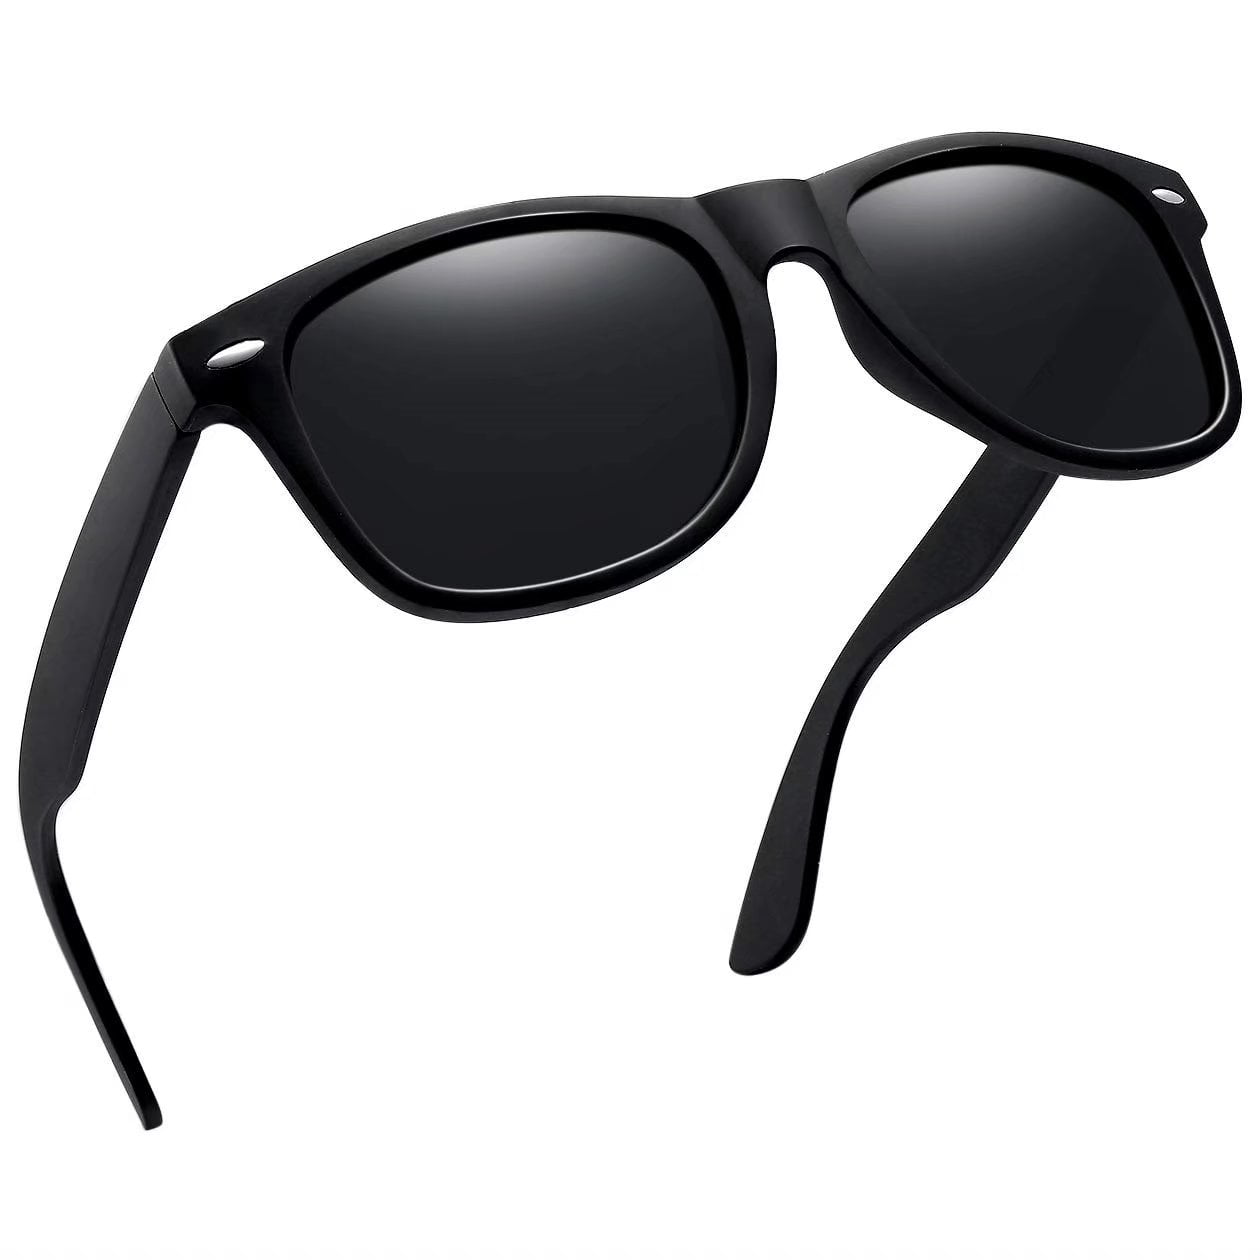 Joopin Square Sunglasses Polarized UV Protection Brazil